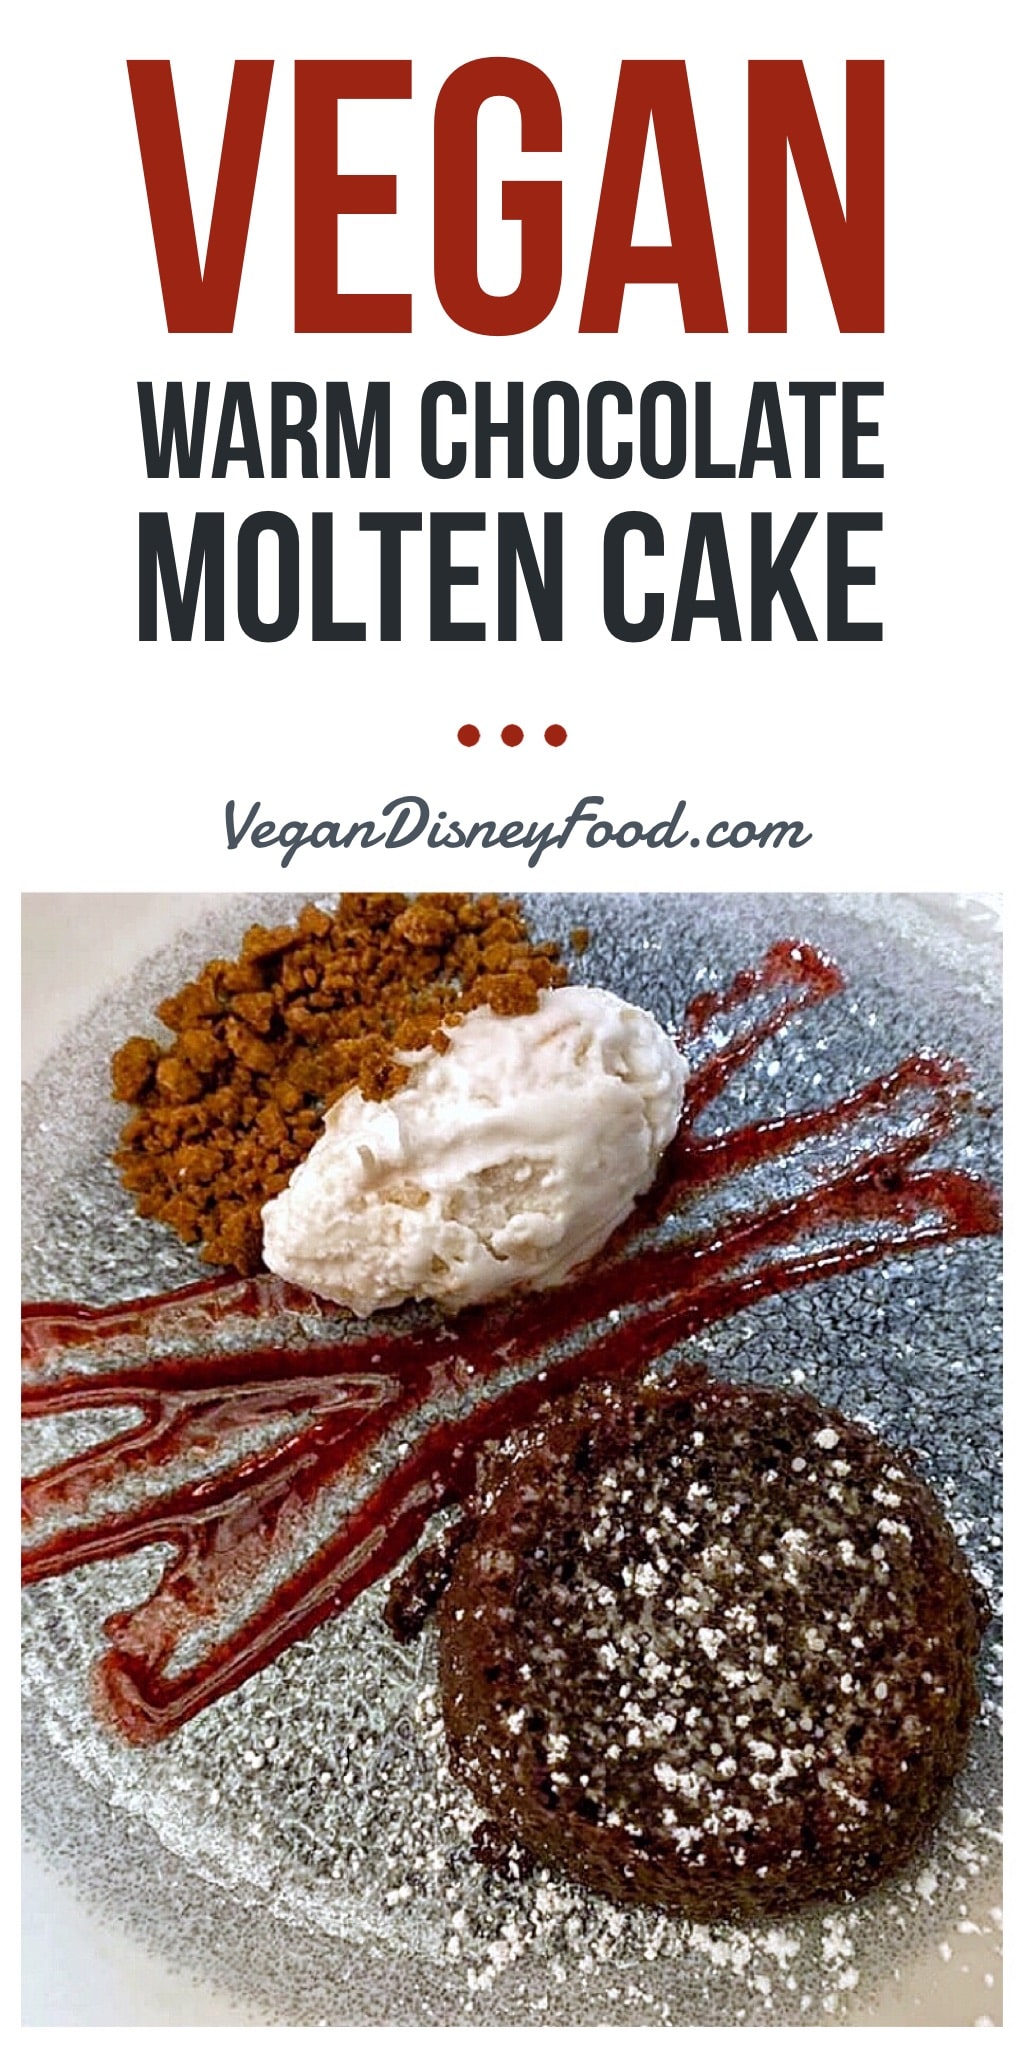 Vegan Warm Chocolate Molten Cake at Yachtsman Steakhouse in Disney’s Yacht Club Resort at Walt Disney World